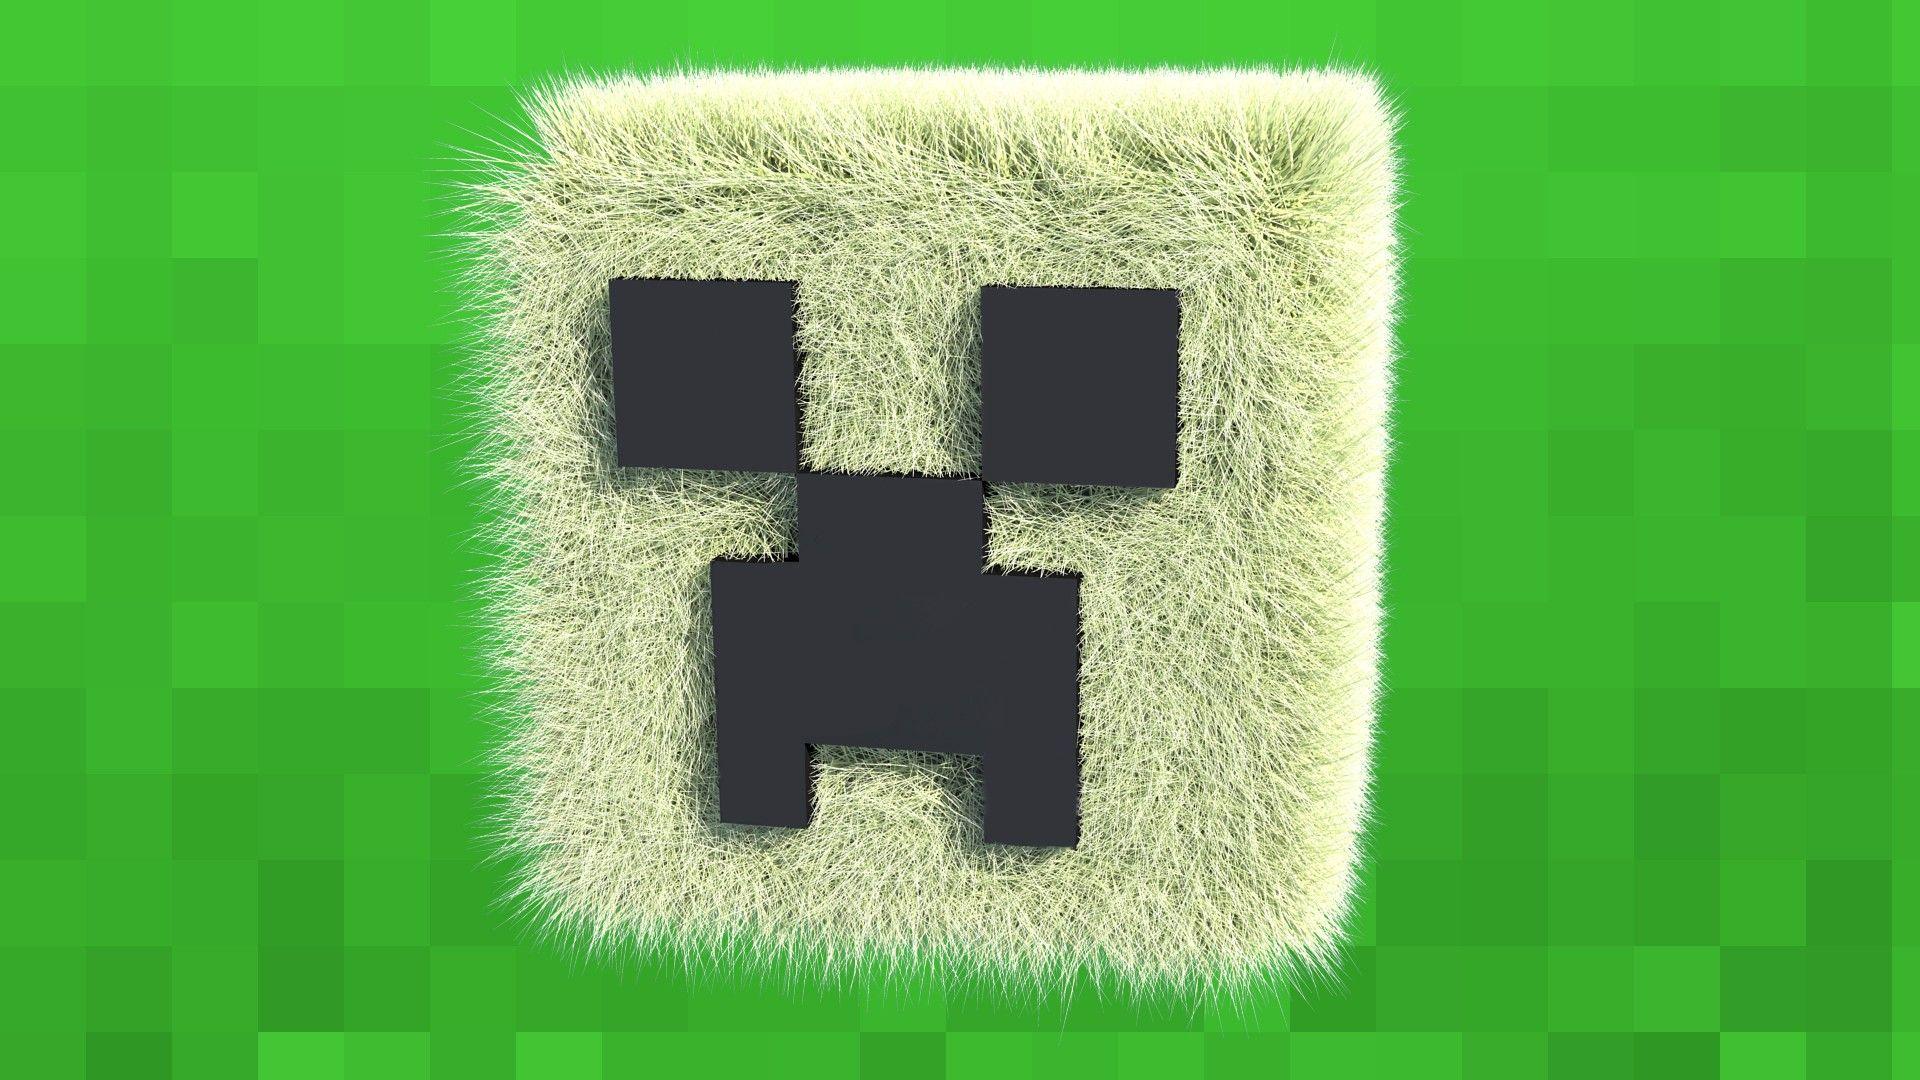 Cool Minecraft Creeper 3D Wallpaper HD Wallpaper of Minecraft